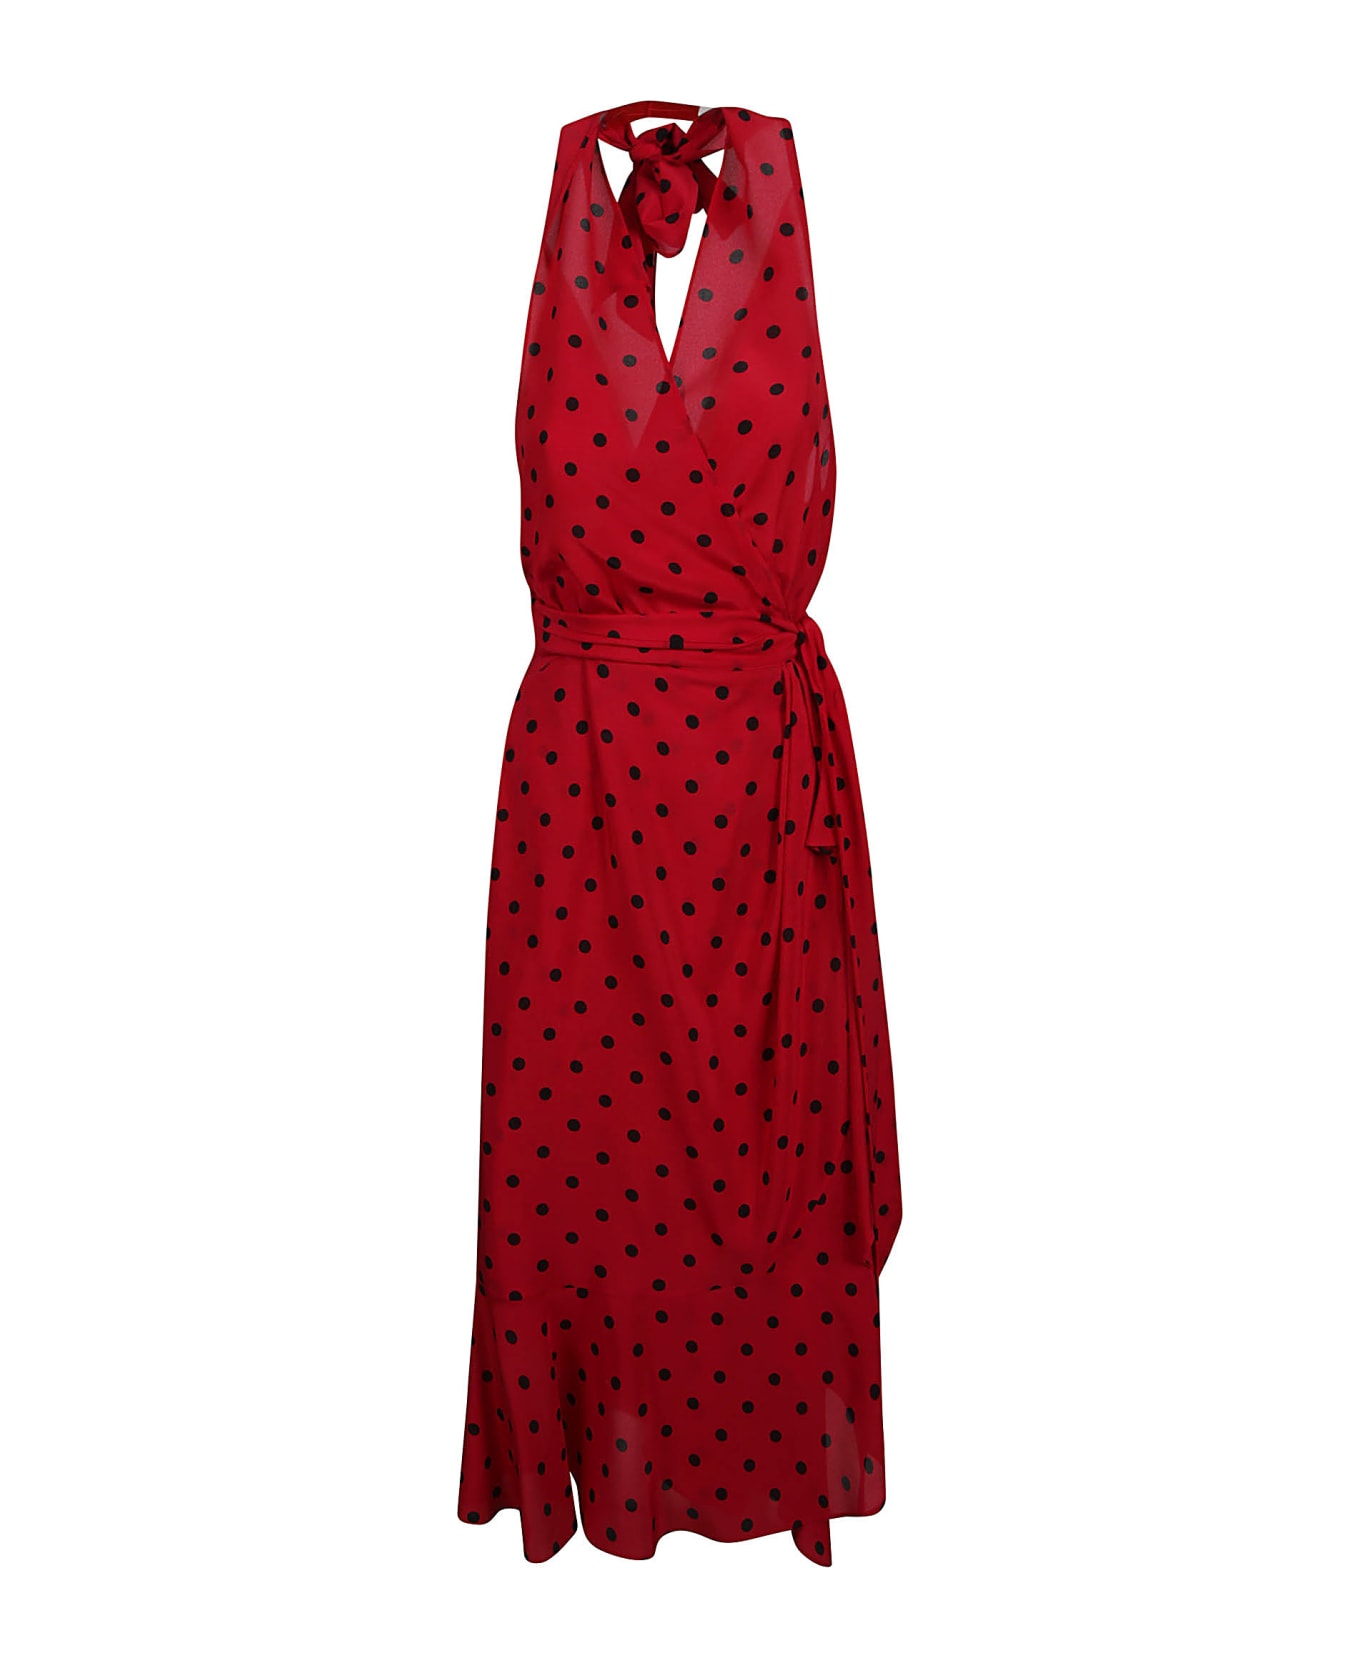 Moschino Dotted Sleeveless Dress - Red